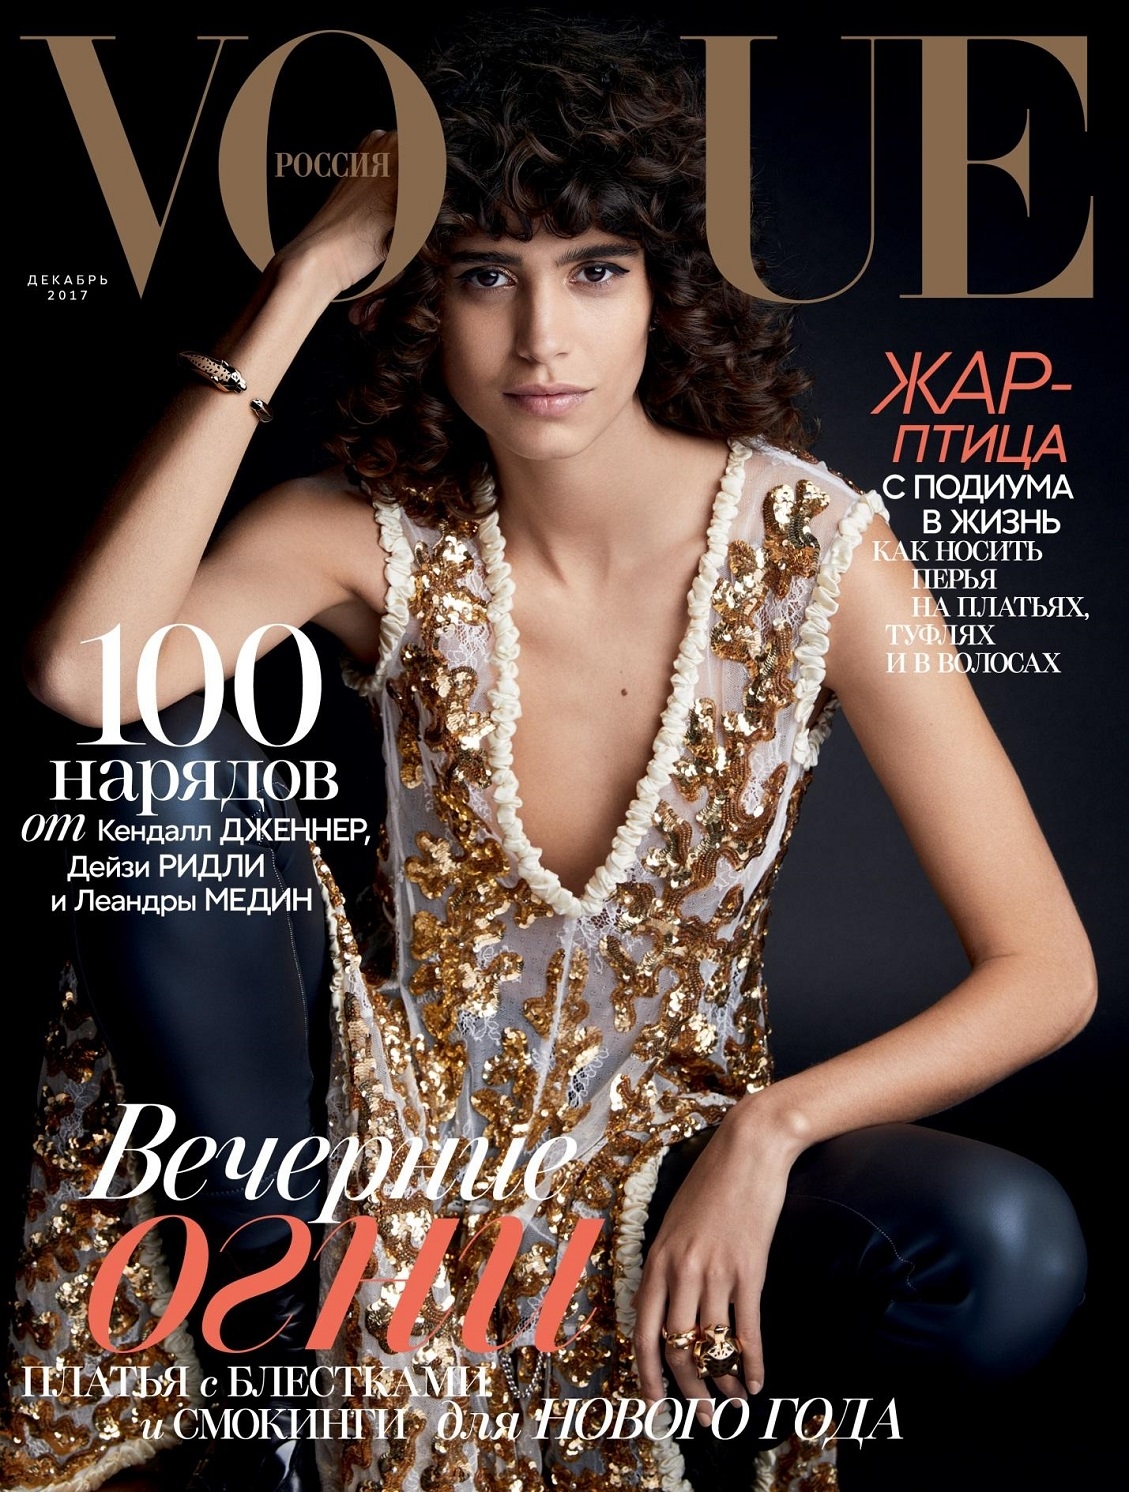 Vogue Russia December 2017 1.jpg